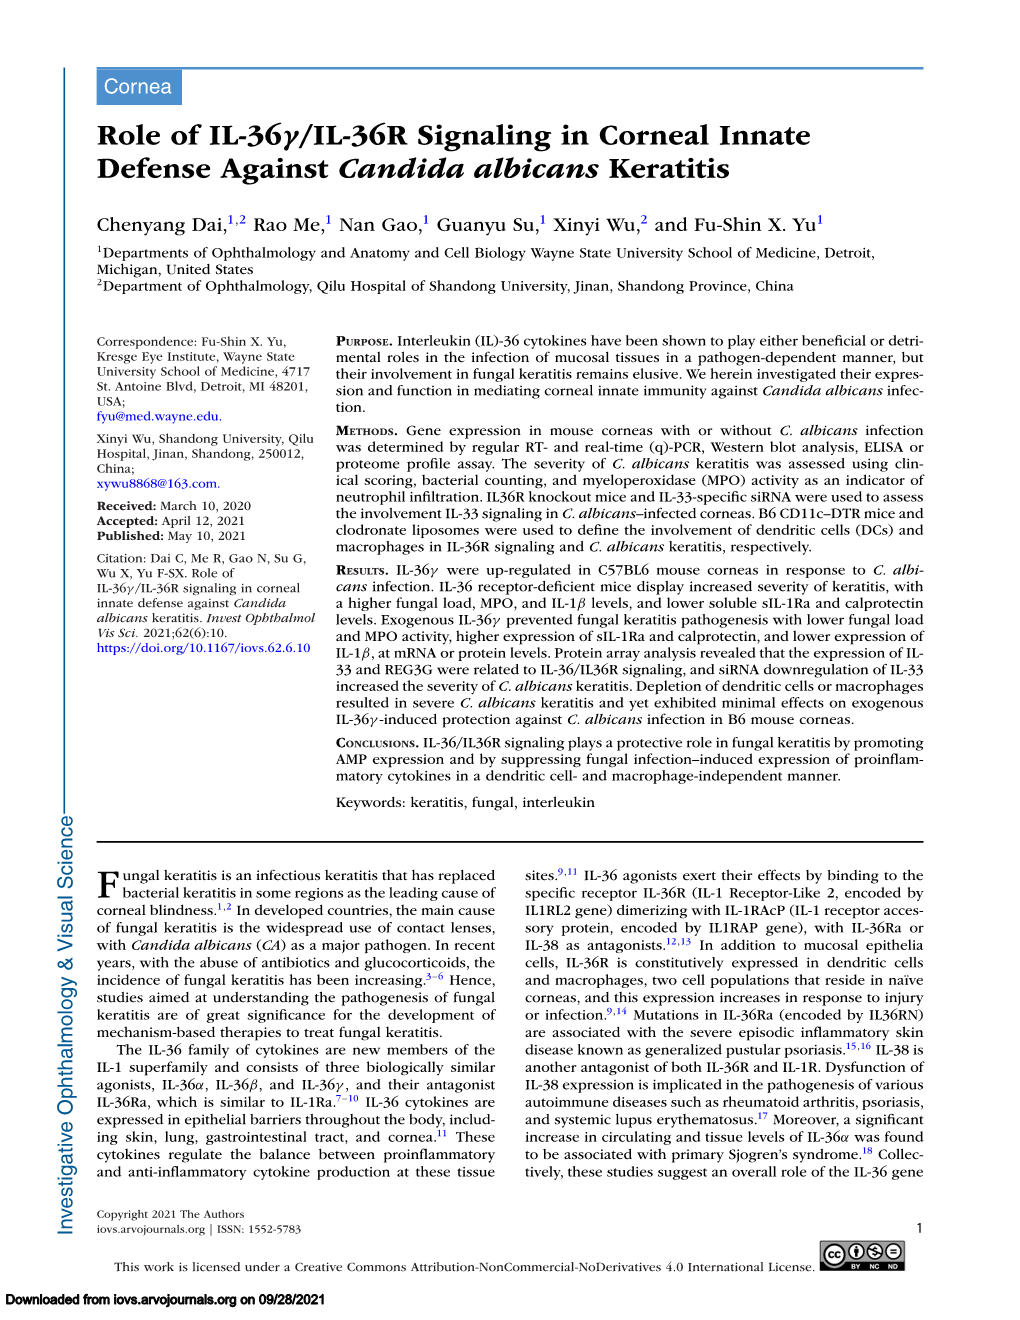 Role of IL-36Γ/IL-36R Signaling in Corneal Innate Defense Against Candida Albicans Keratitis